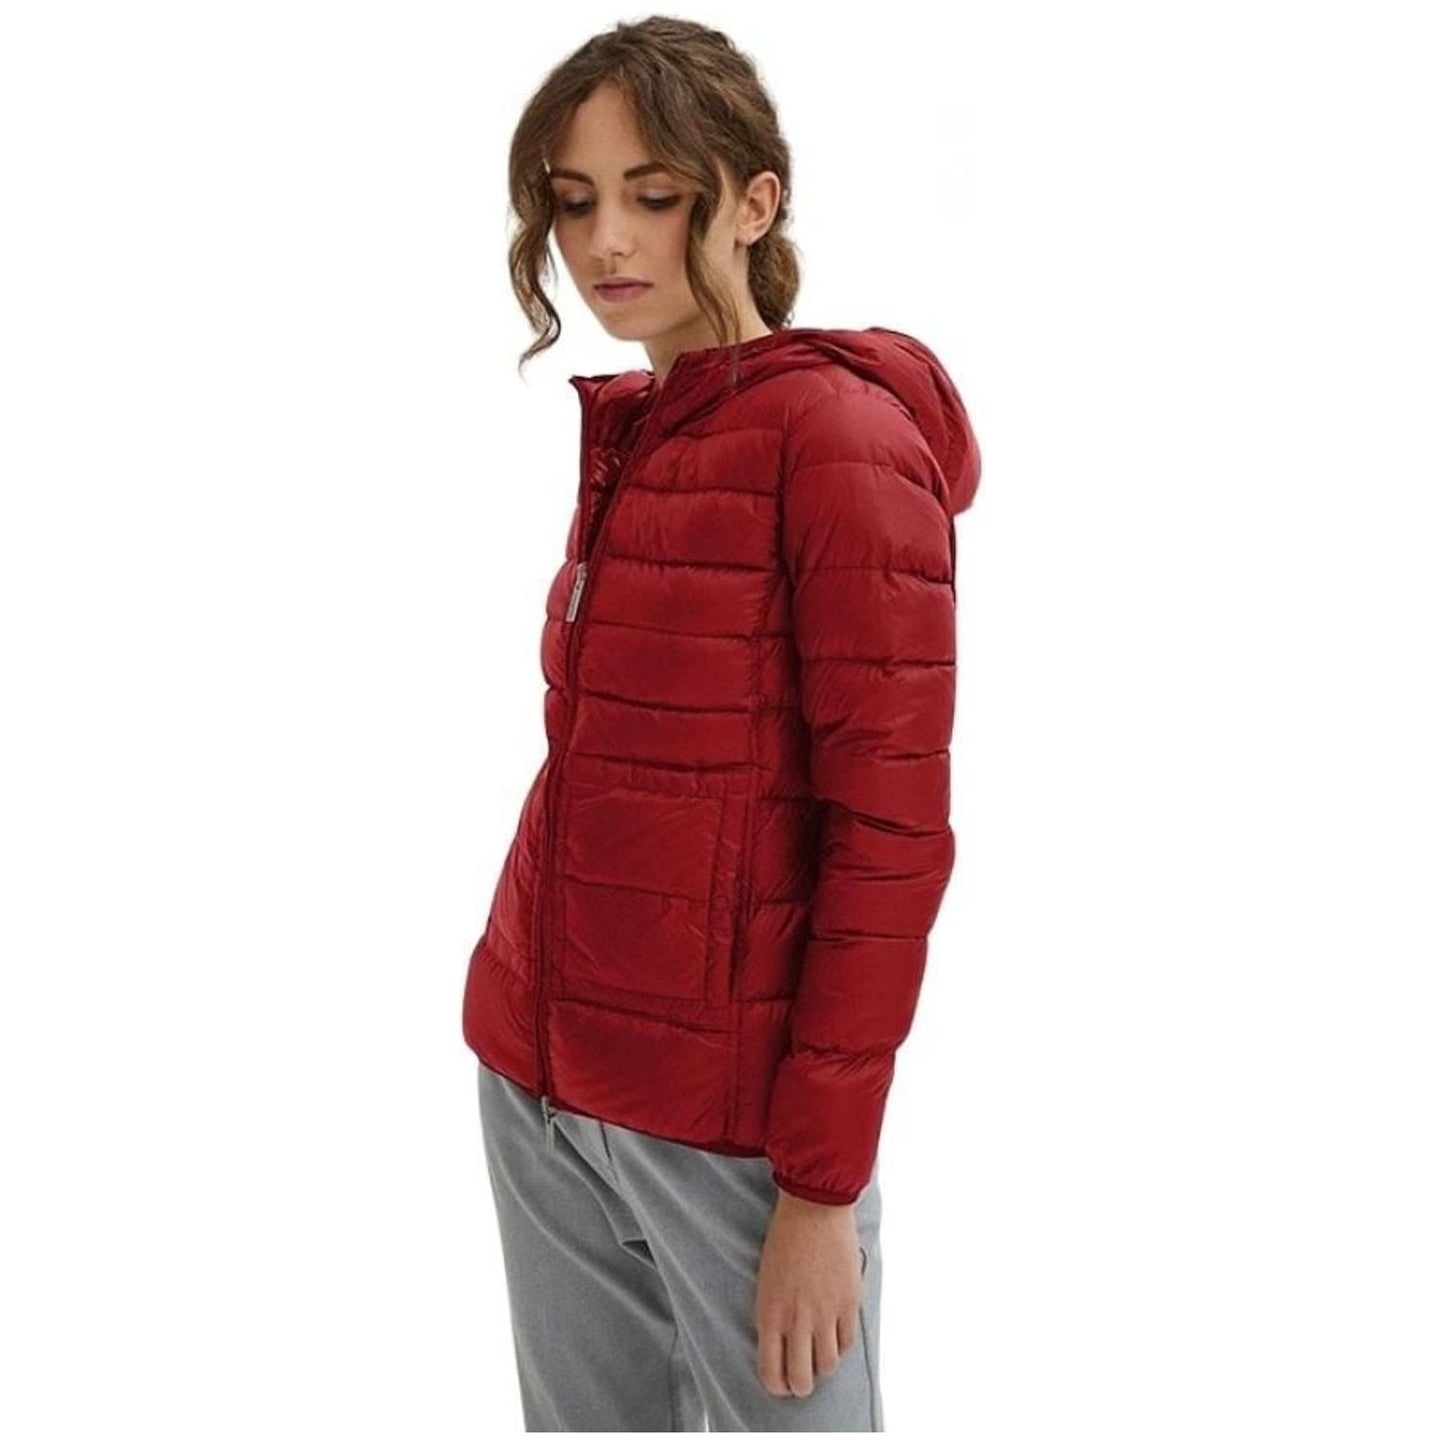 Centogrammi Elegant Ultra Light Hooded Down Jacket red-nylon-jackets-coat-2 product-8591-1065464587-23f1104a-143.jpg